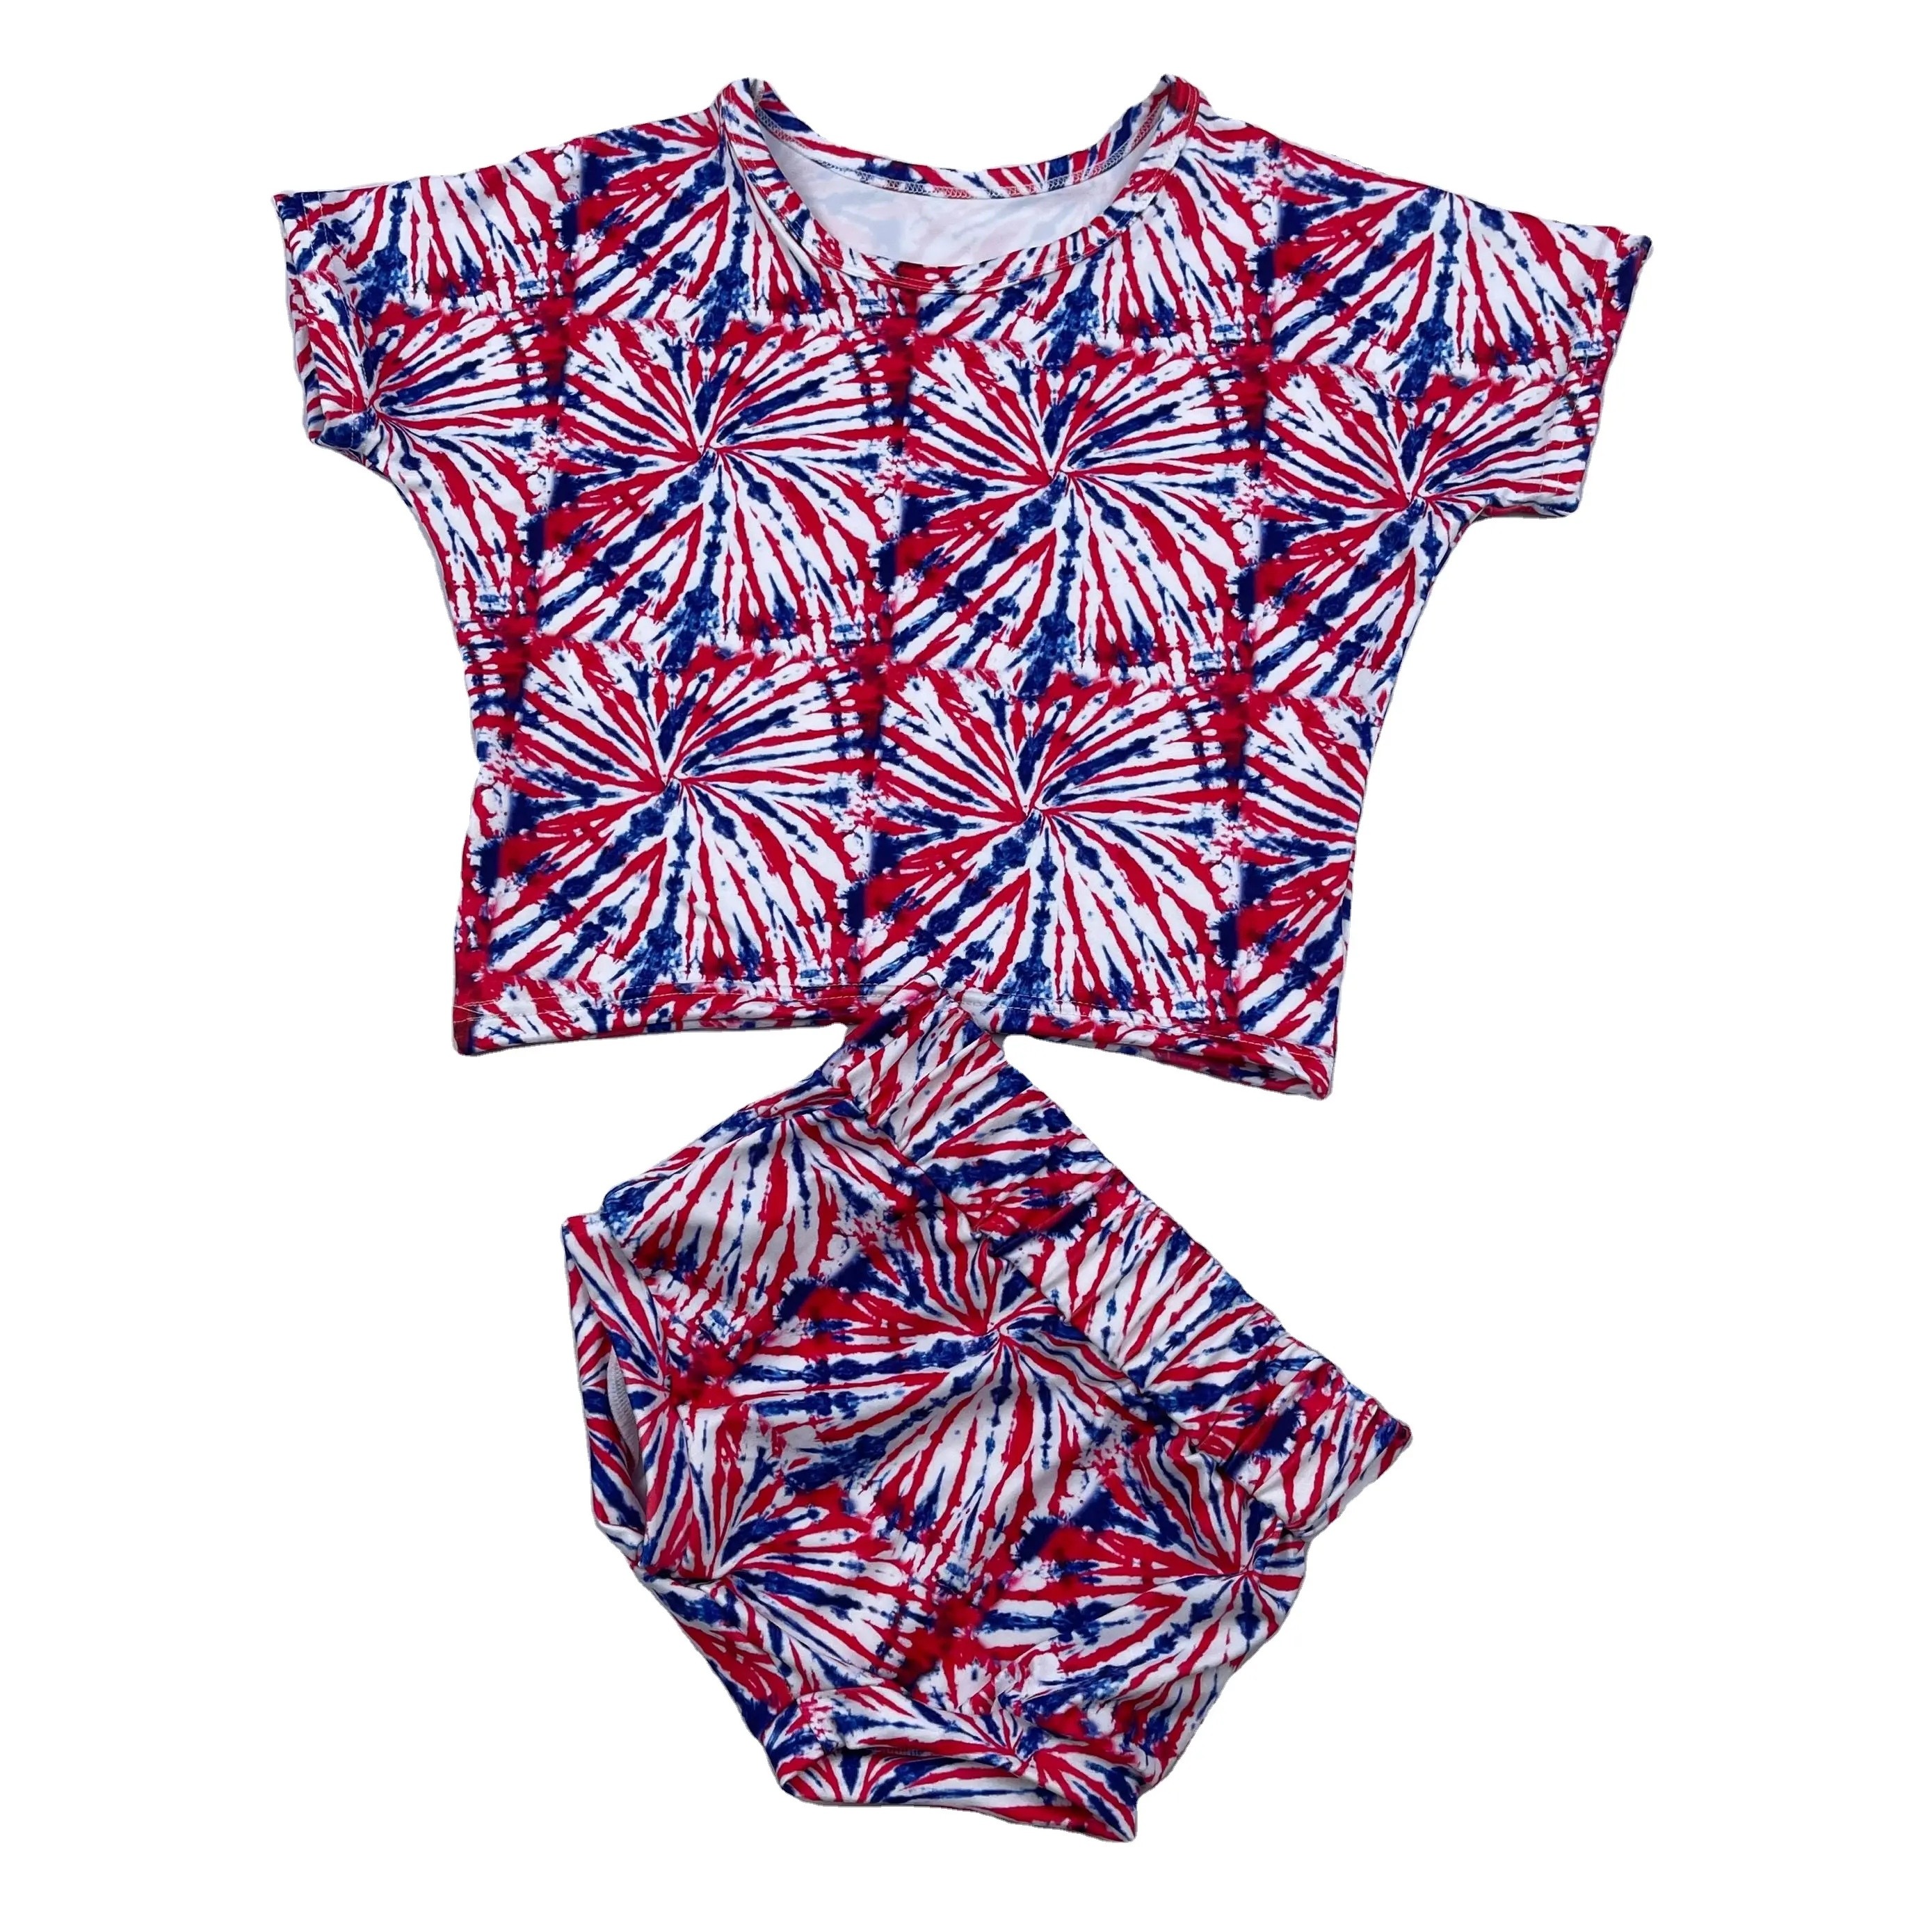 Neuankömmling Toddler Boutique Outfits 4. Juli Star Print Overs ize Crop Top Mit Bummies Set Kinder bekleidung Set